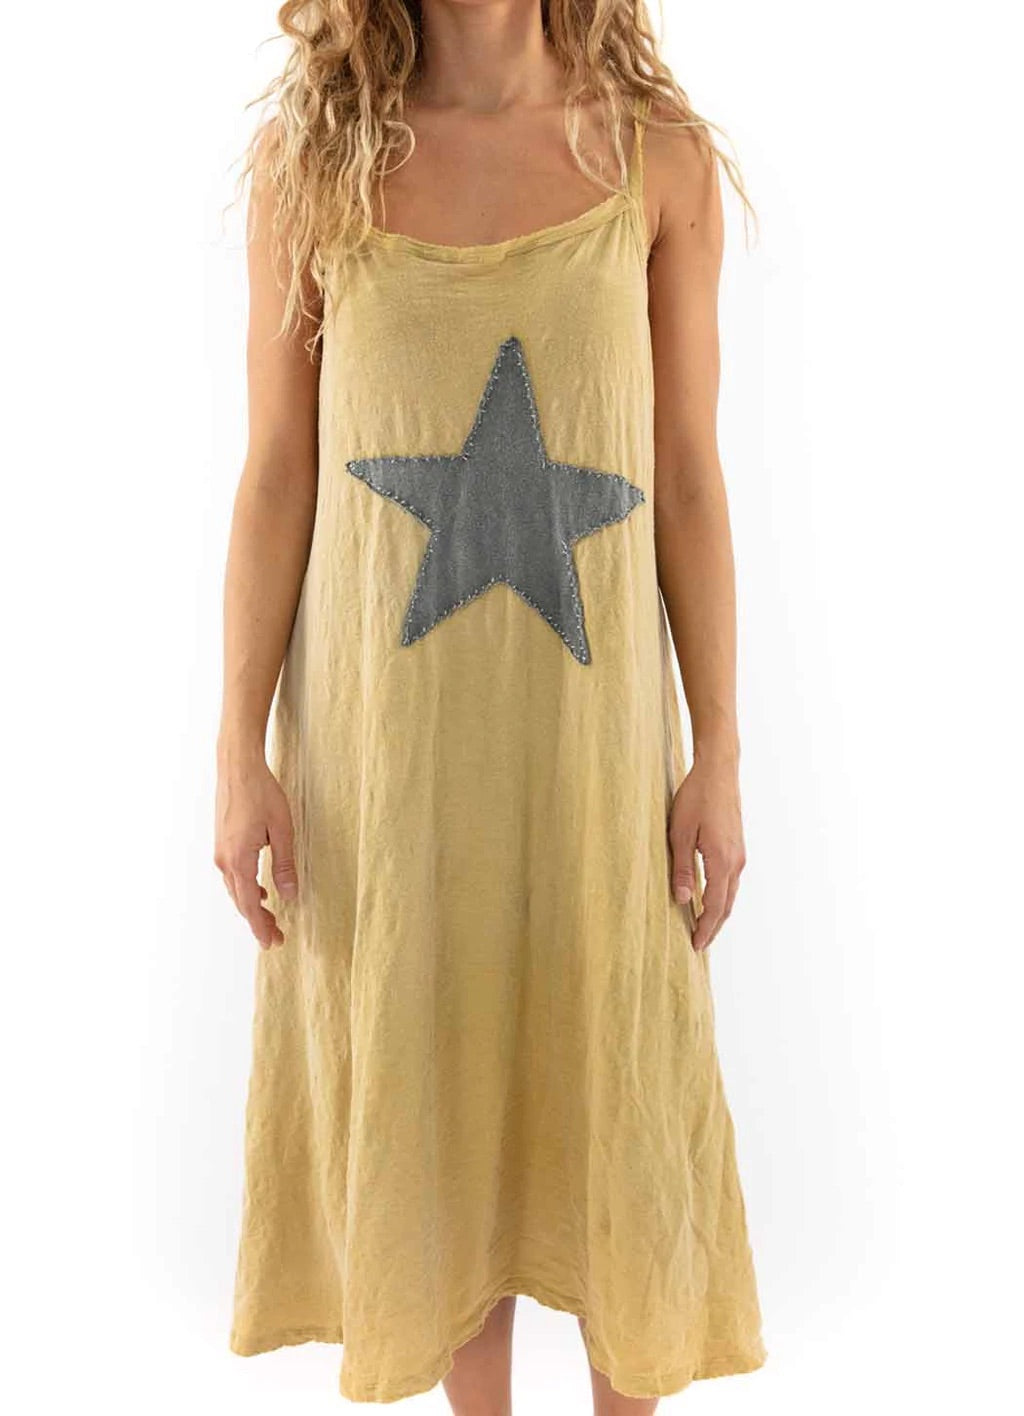 Magnolia Pearl Star Applique Lana Tank Dress One Size Molly - 799